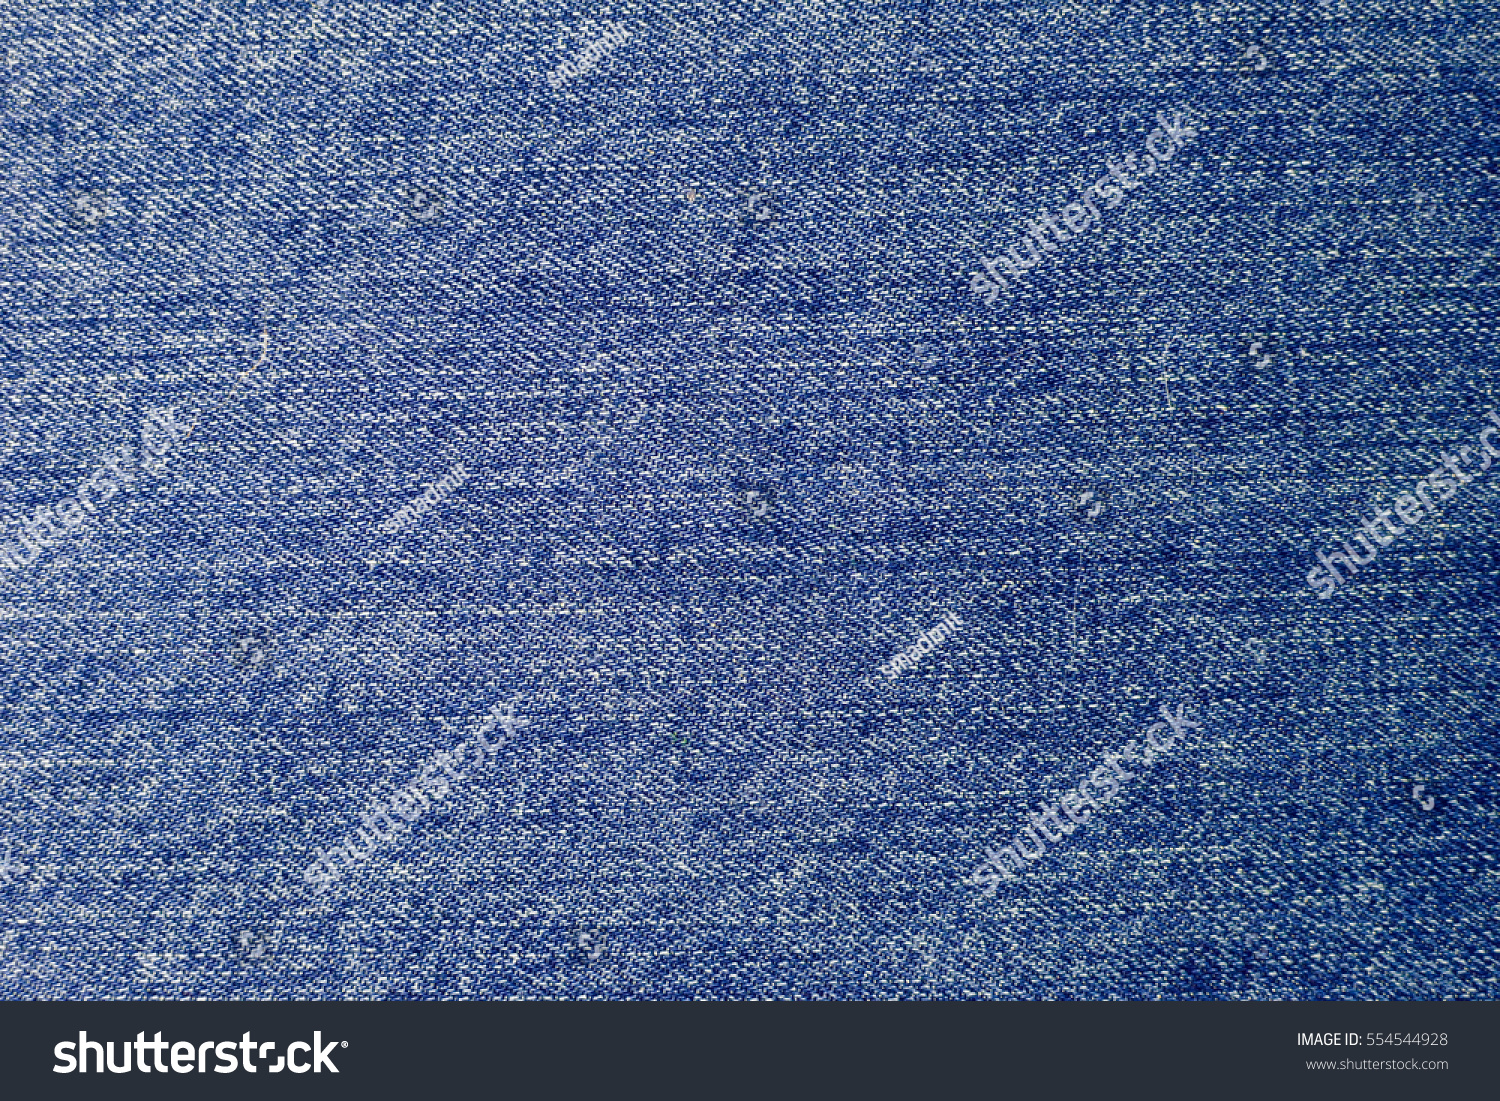 Blue Jeans Background Denim Fabric Texture Stock Photo 554544928 ...